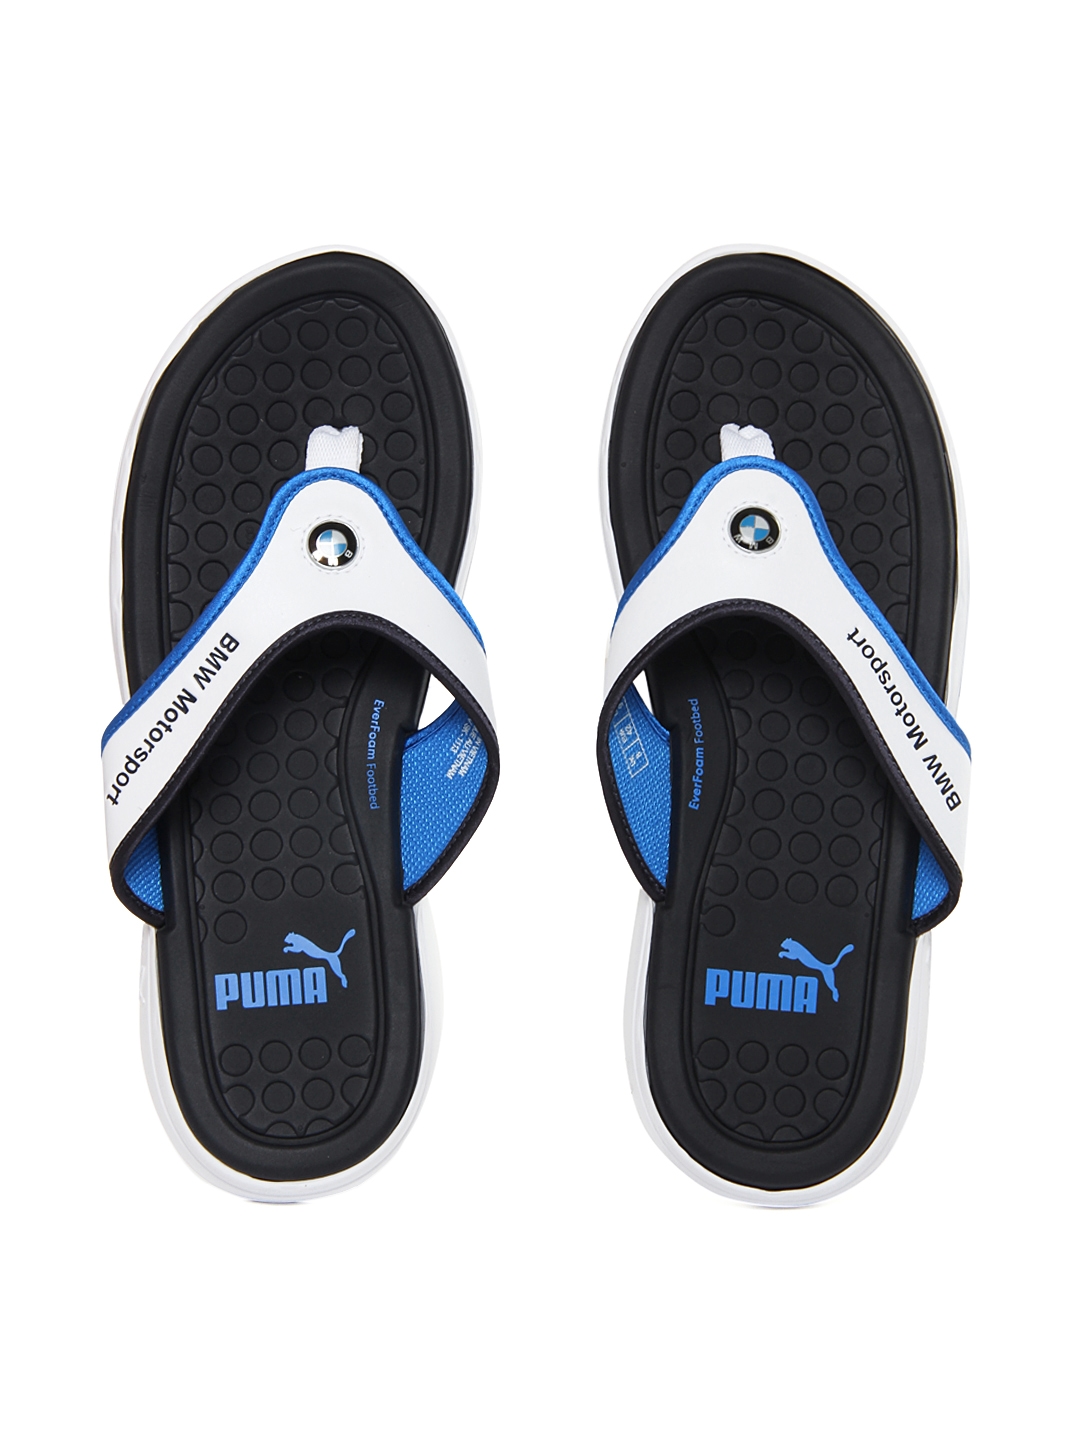 puma bmw slippers online